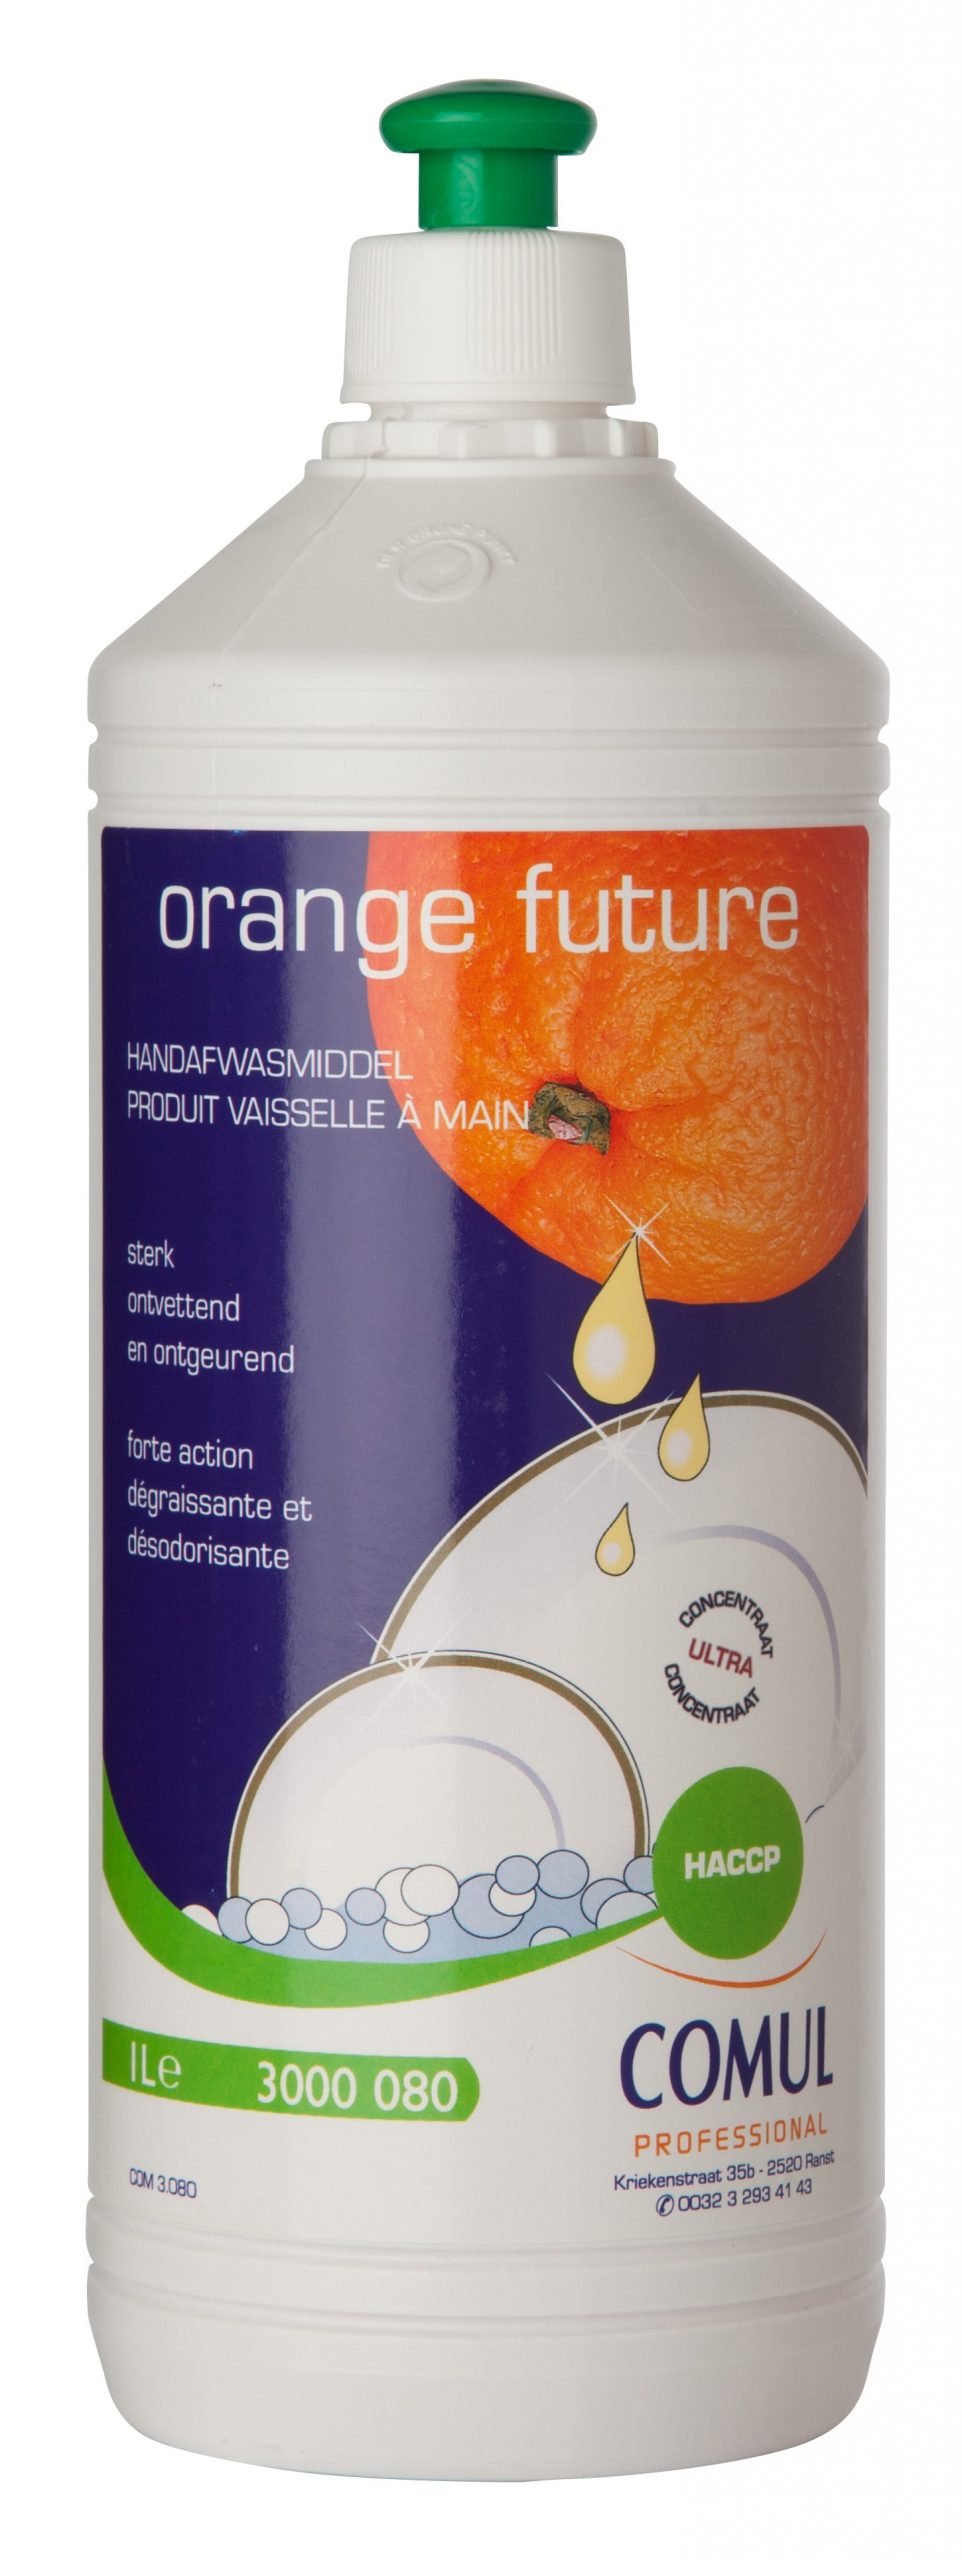 Orange future handafwasmiddel 1l